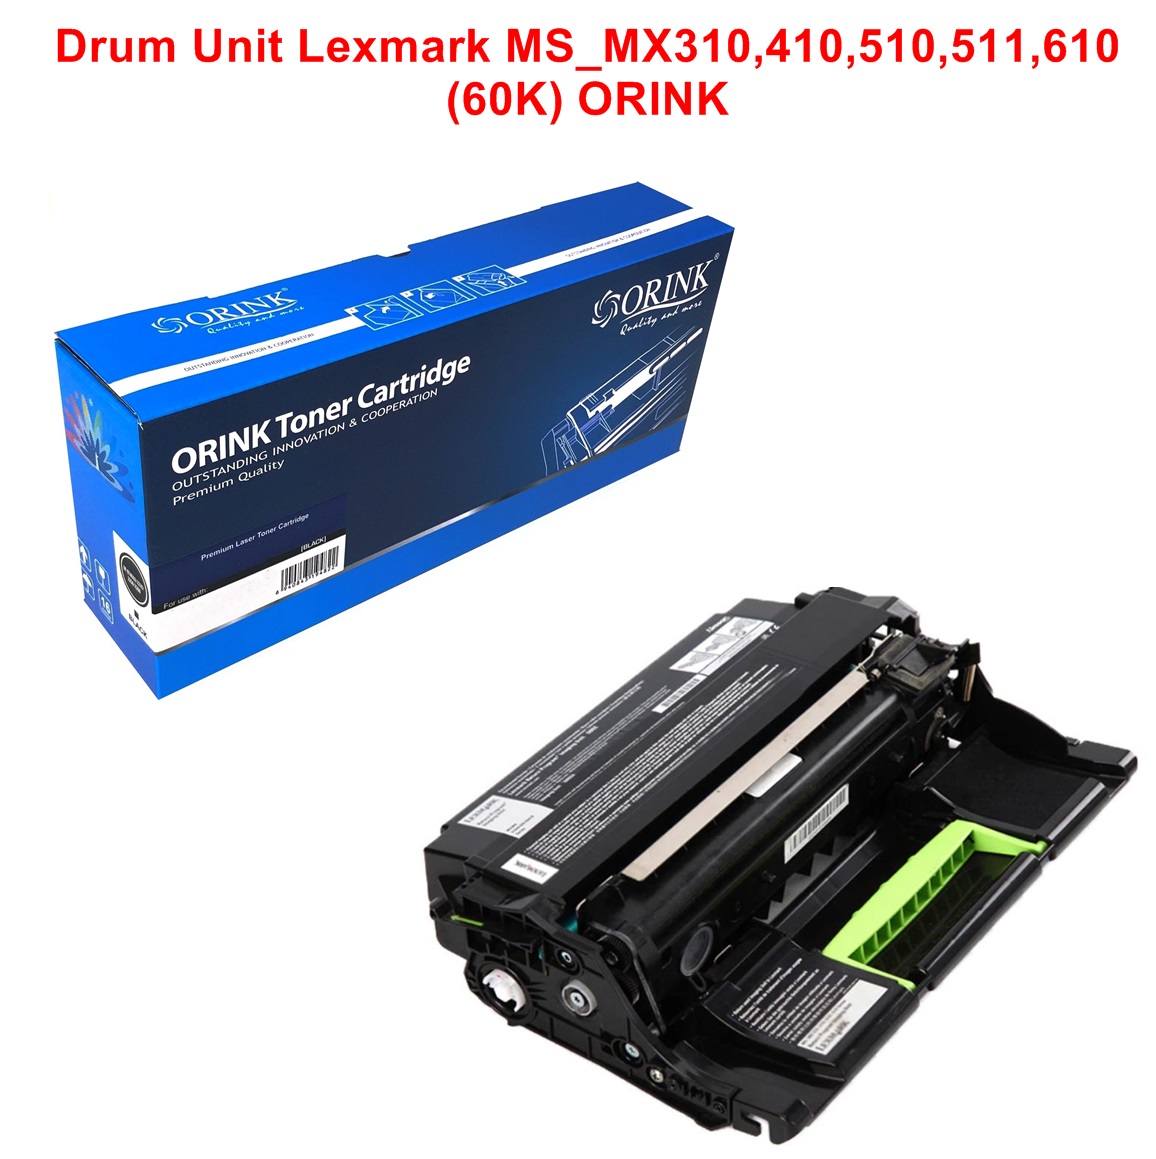 Drum Unit Lexmark MS_MX310,410,510,511,610 ORINK